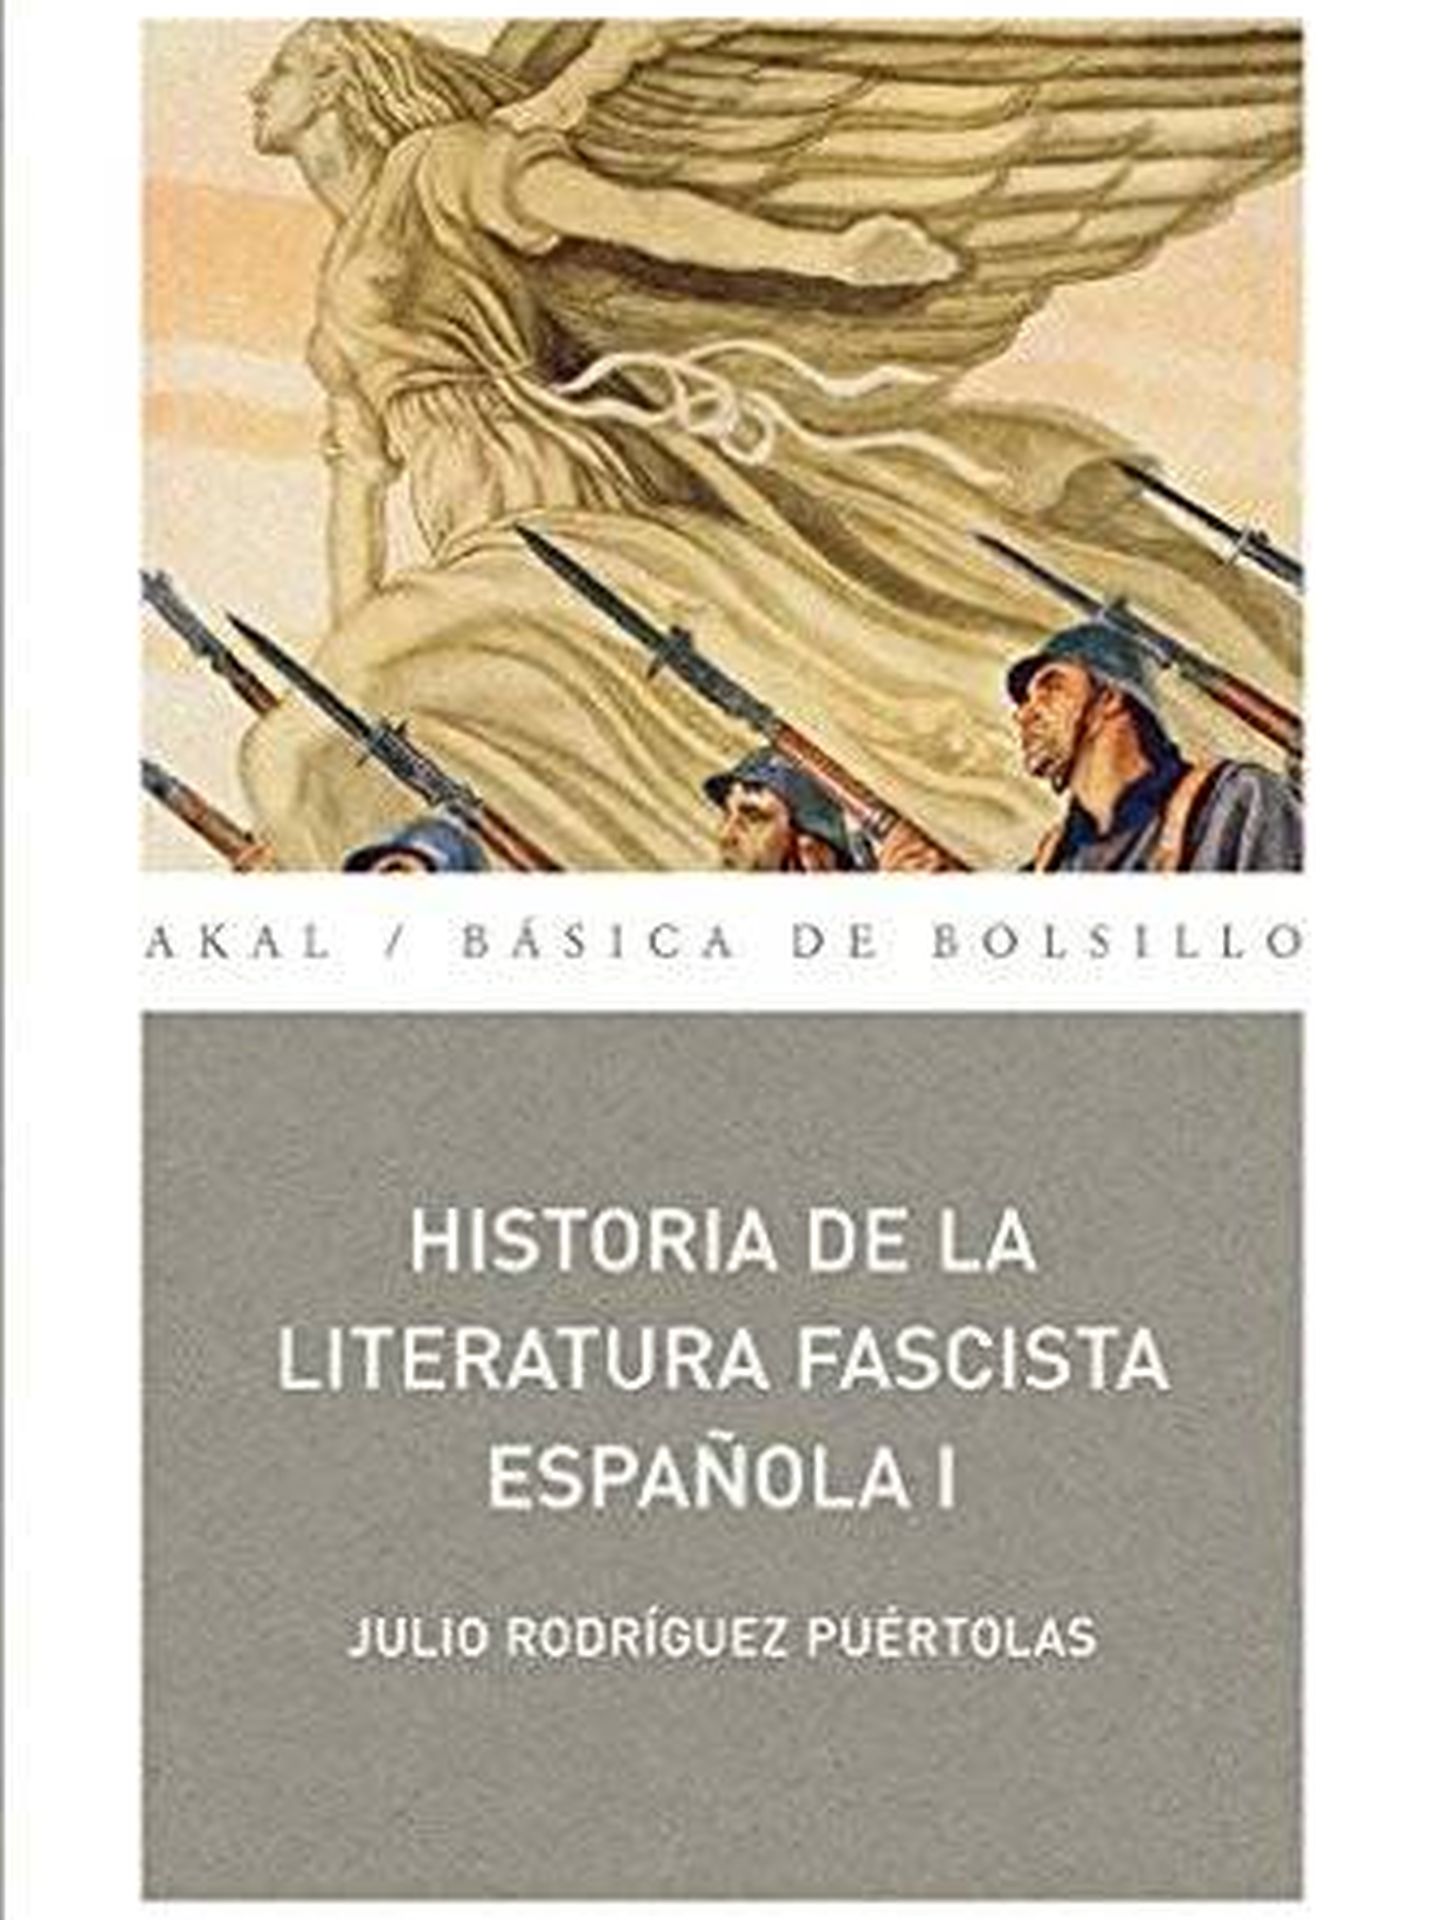 'Historia de la literatura fascista'